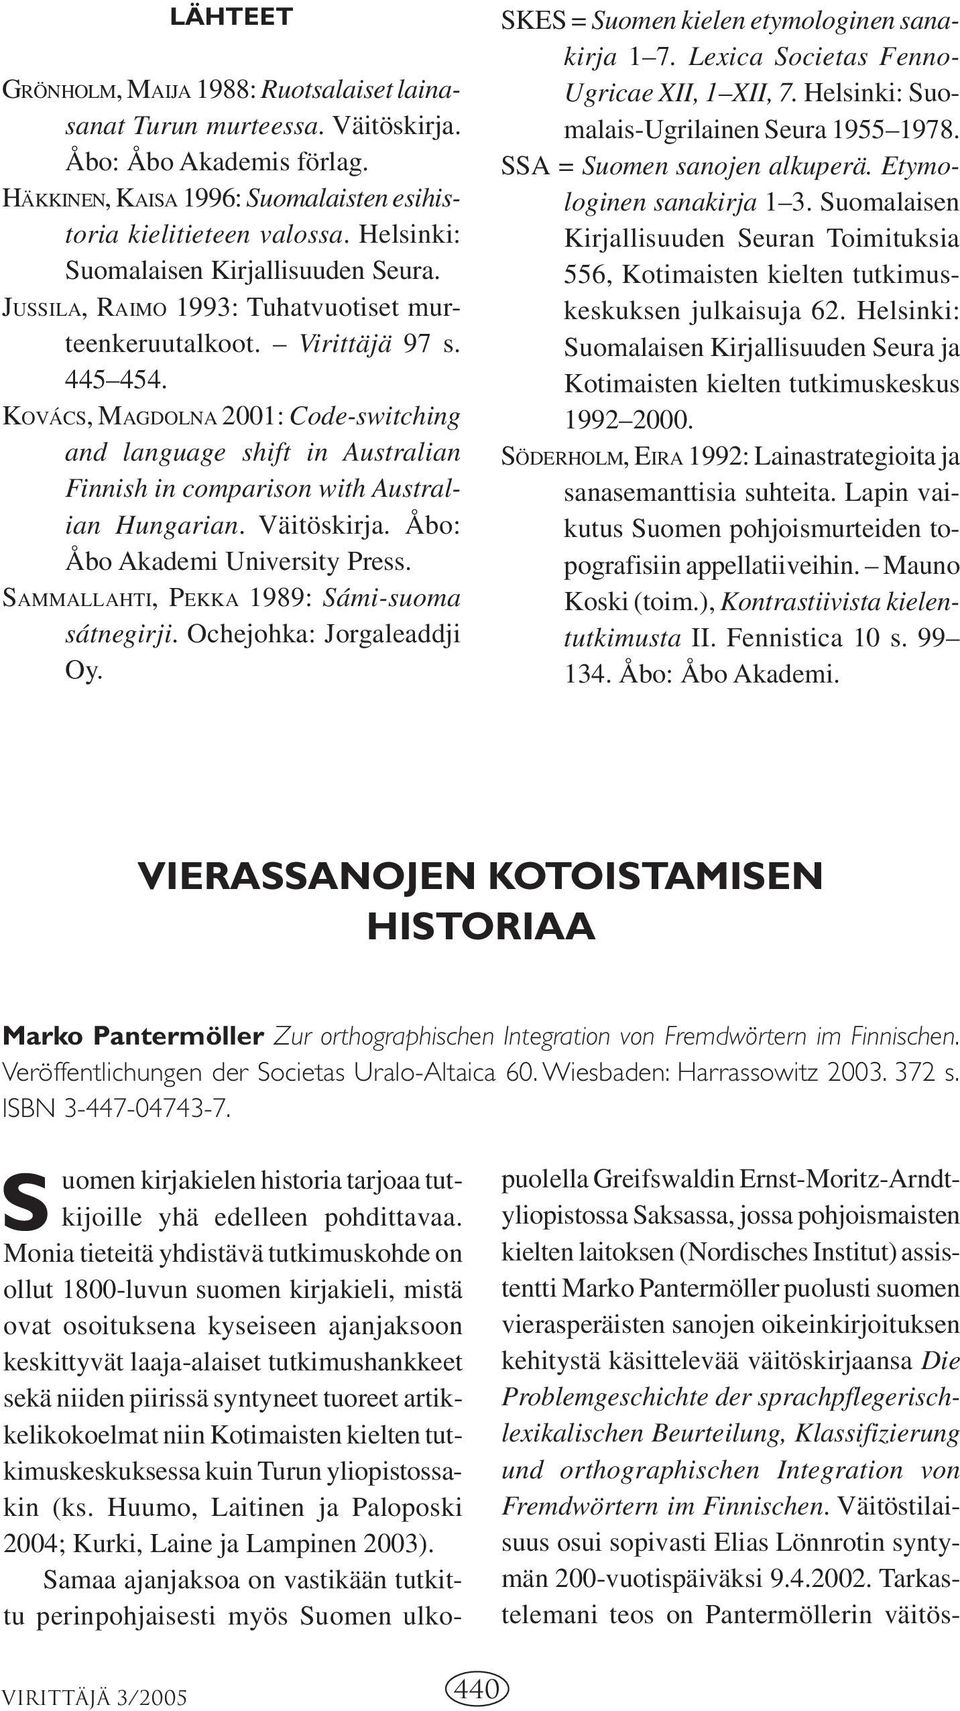 KOVÁCS, MAGDOLNA 2001: Code-switching and language shift in Australian Finnish in comparison with Australian Hungarian. Väitöskirja. Åbo: Åbo Akademi University Press.